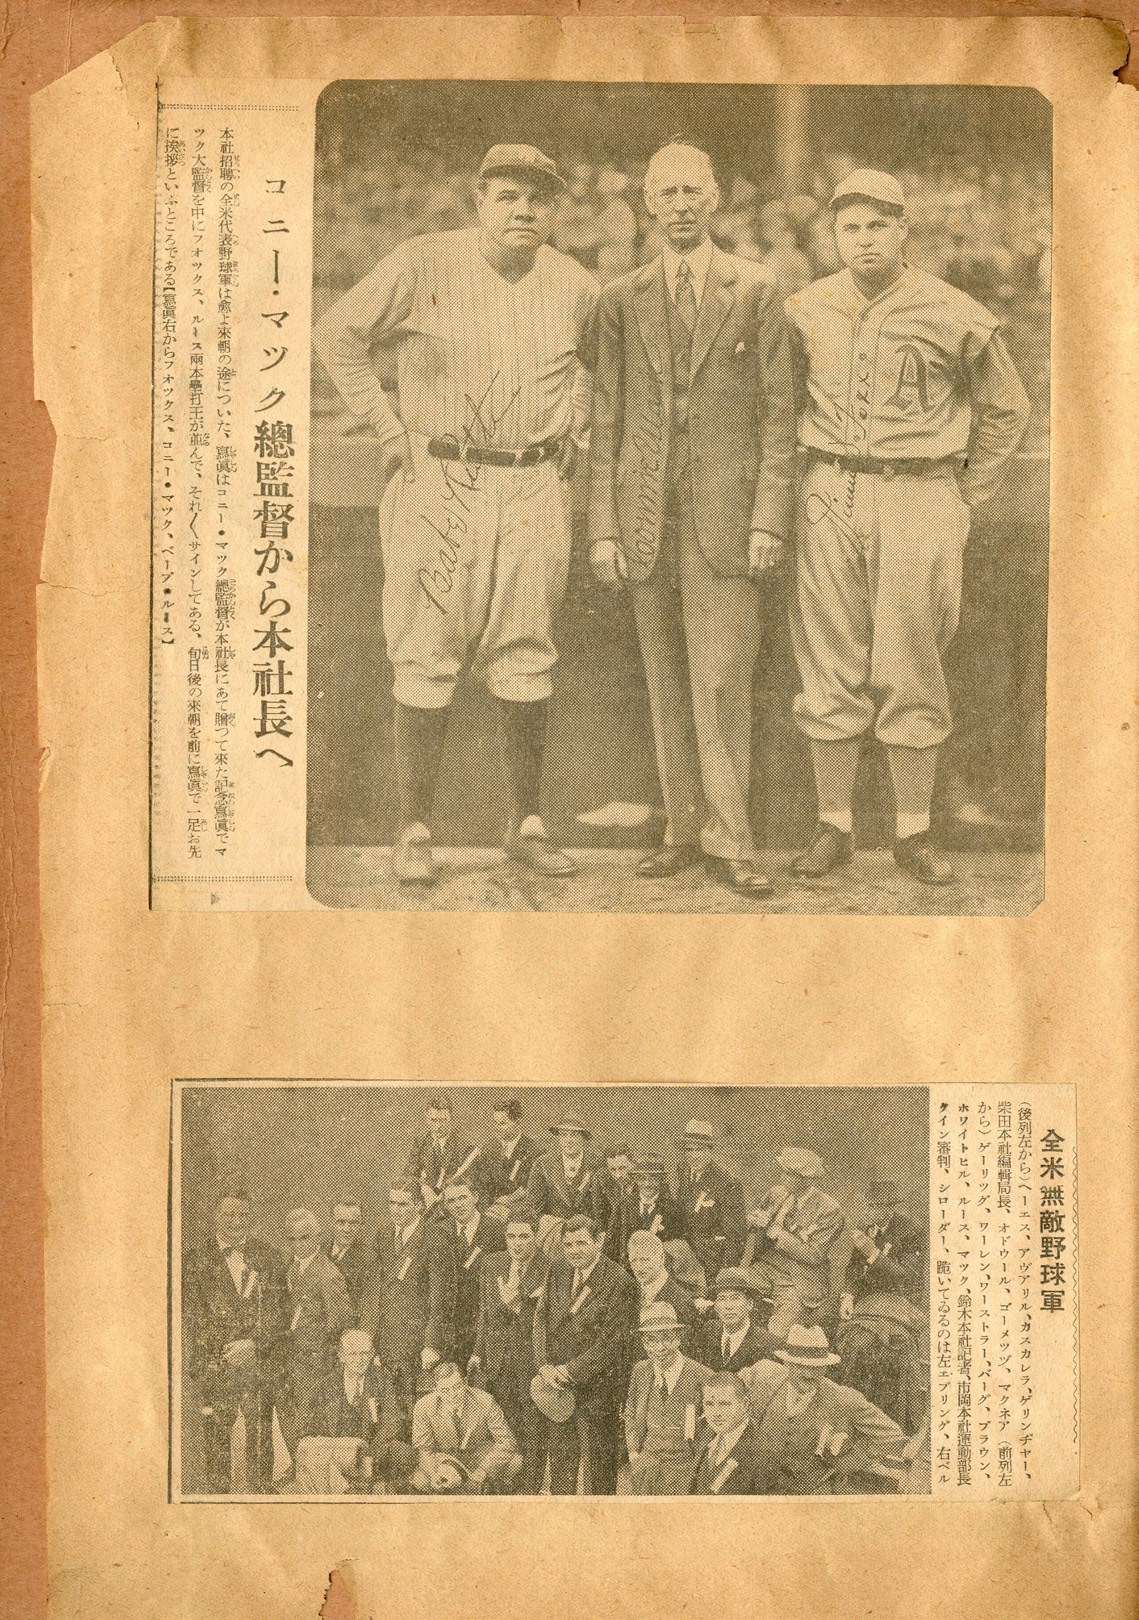 Negro League, Latin, Japanese & International Base - 1934 Tour of Japan Scrapbook